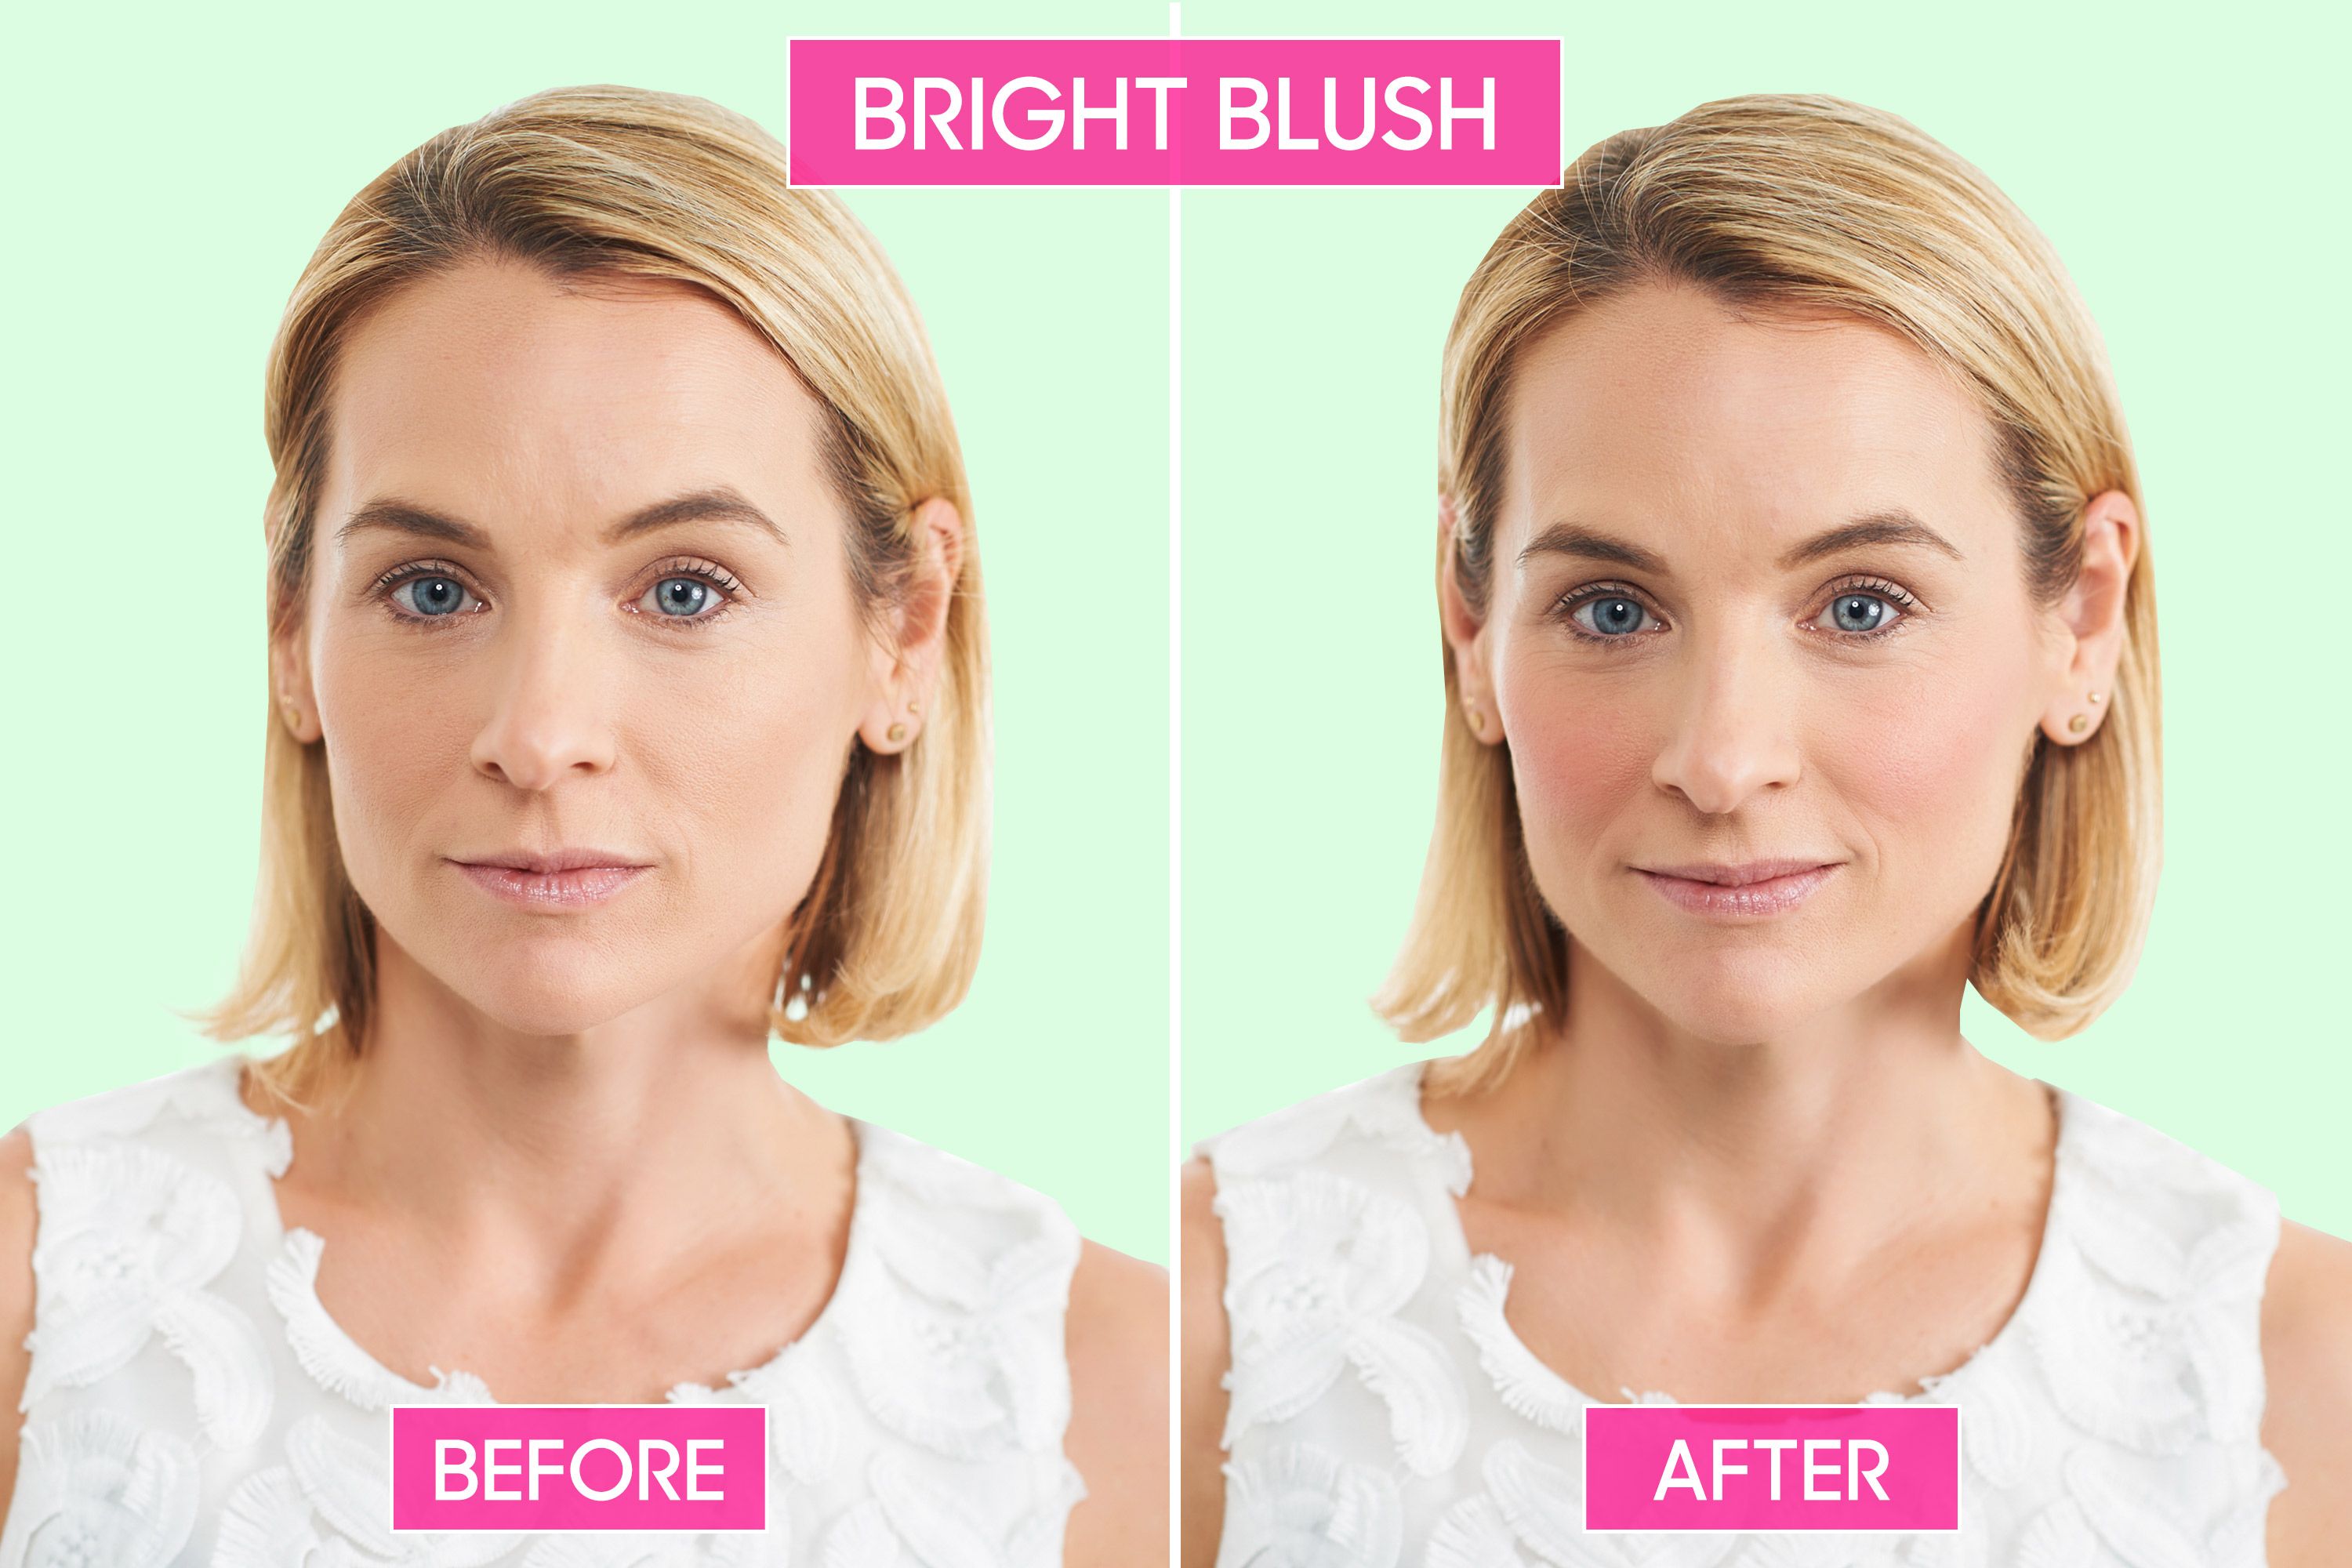 Makeup Trends Women Over 40 Shouldnt Be Afraid To Try